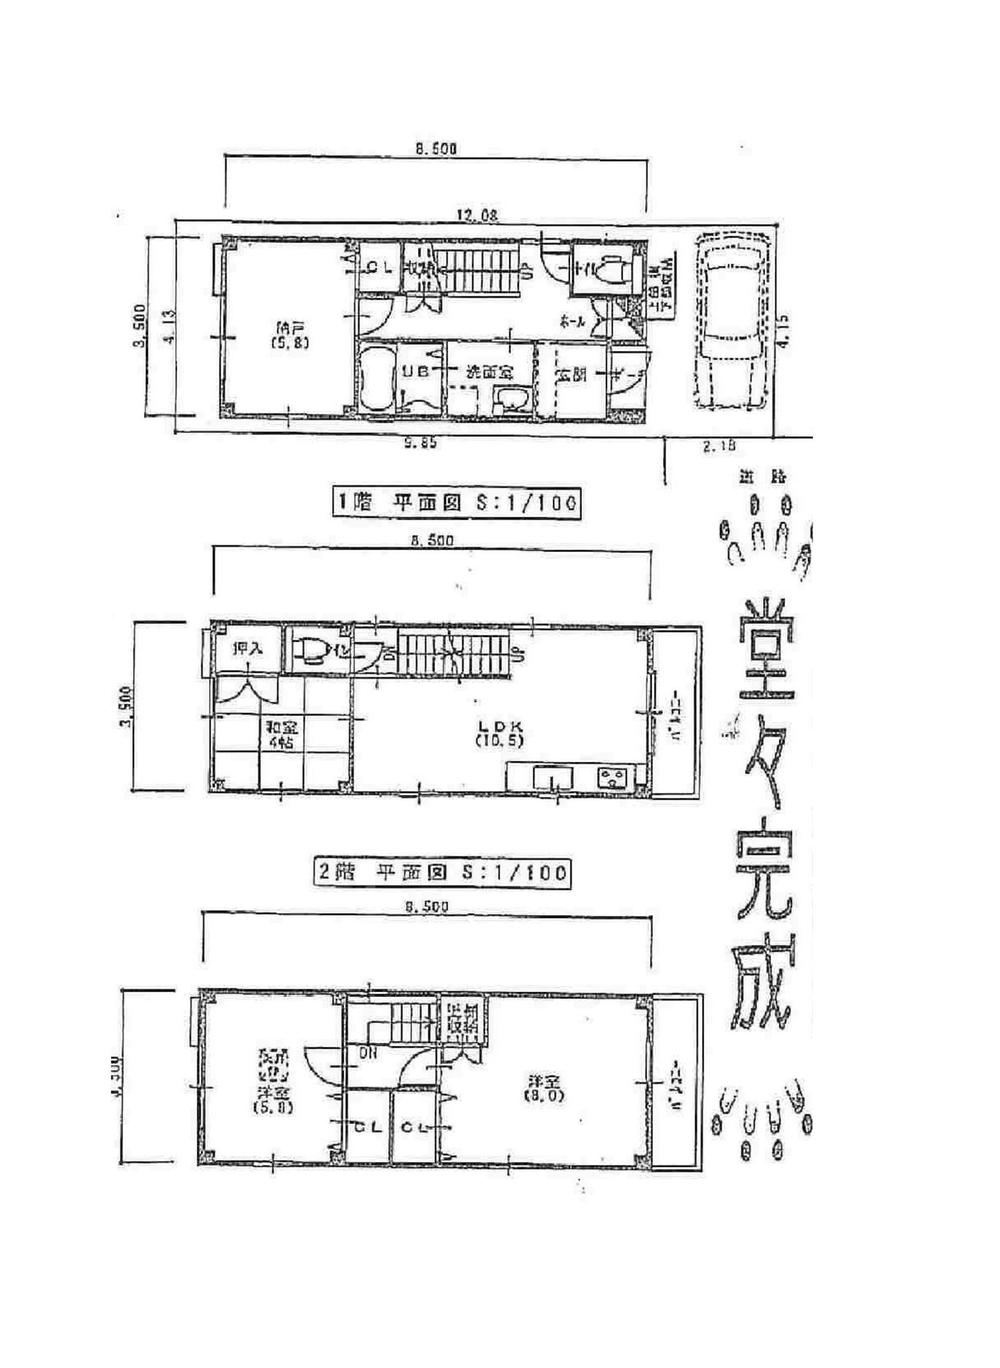 Floor plan. 25,800,000 yen, 4LDK, Land area 50.07 sq m , Building area 88.16 sq m